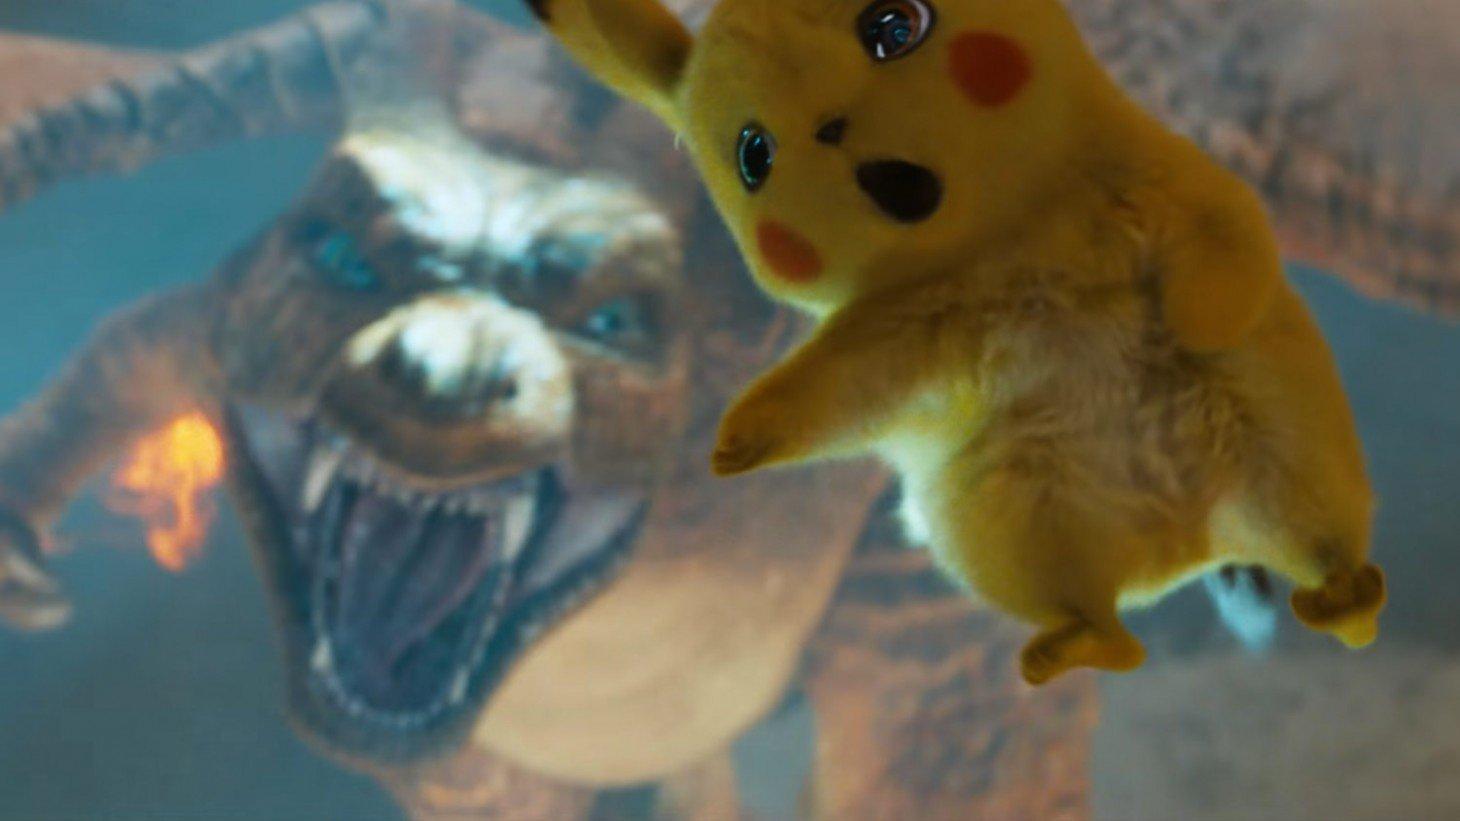 Realistic Pokémon Artist Landed Detective Pikachu Movie Job After